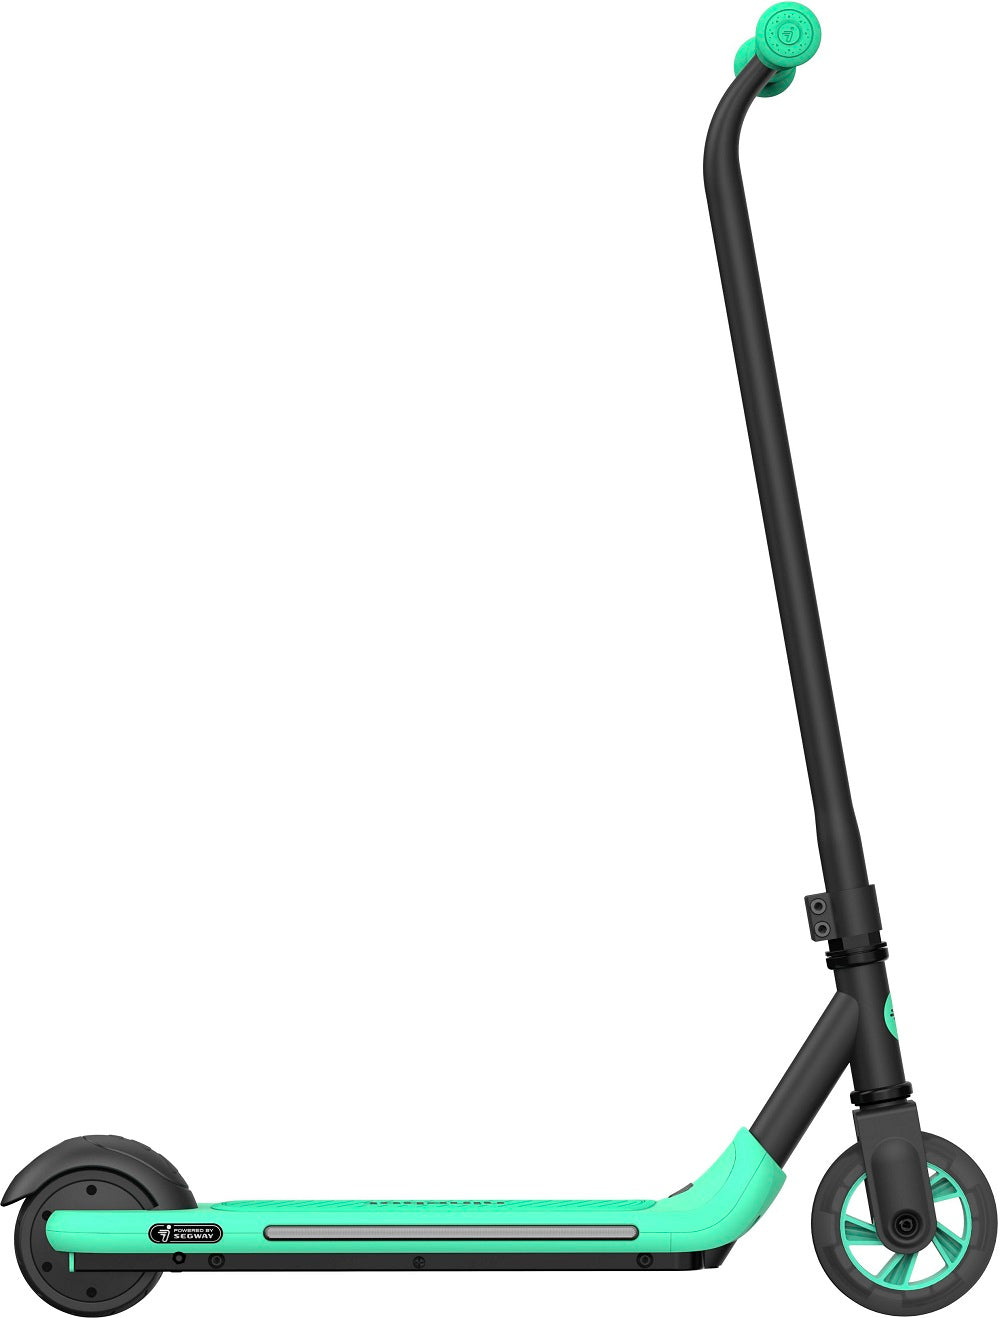 Segway Ninebot A6 Kids Electric KickScooter w/7.4 mph Max Speed - Black (Refurbished)